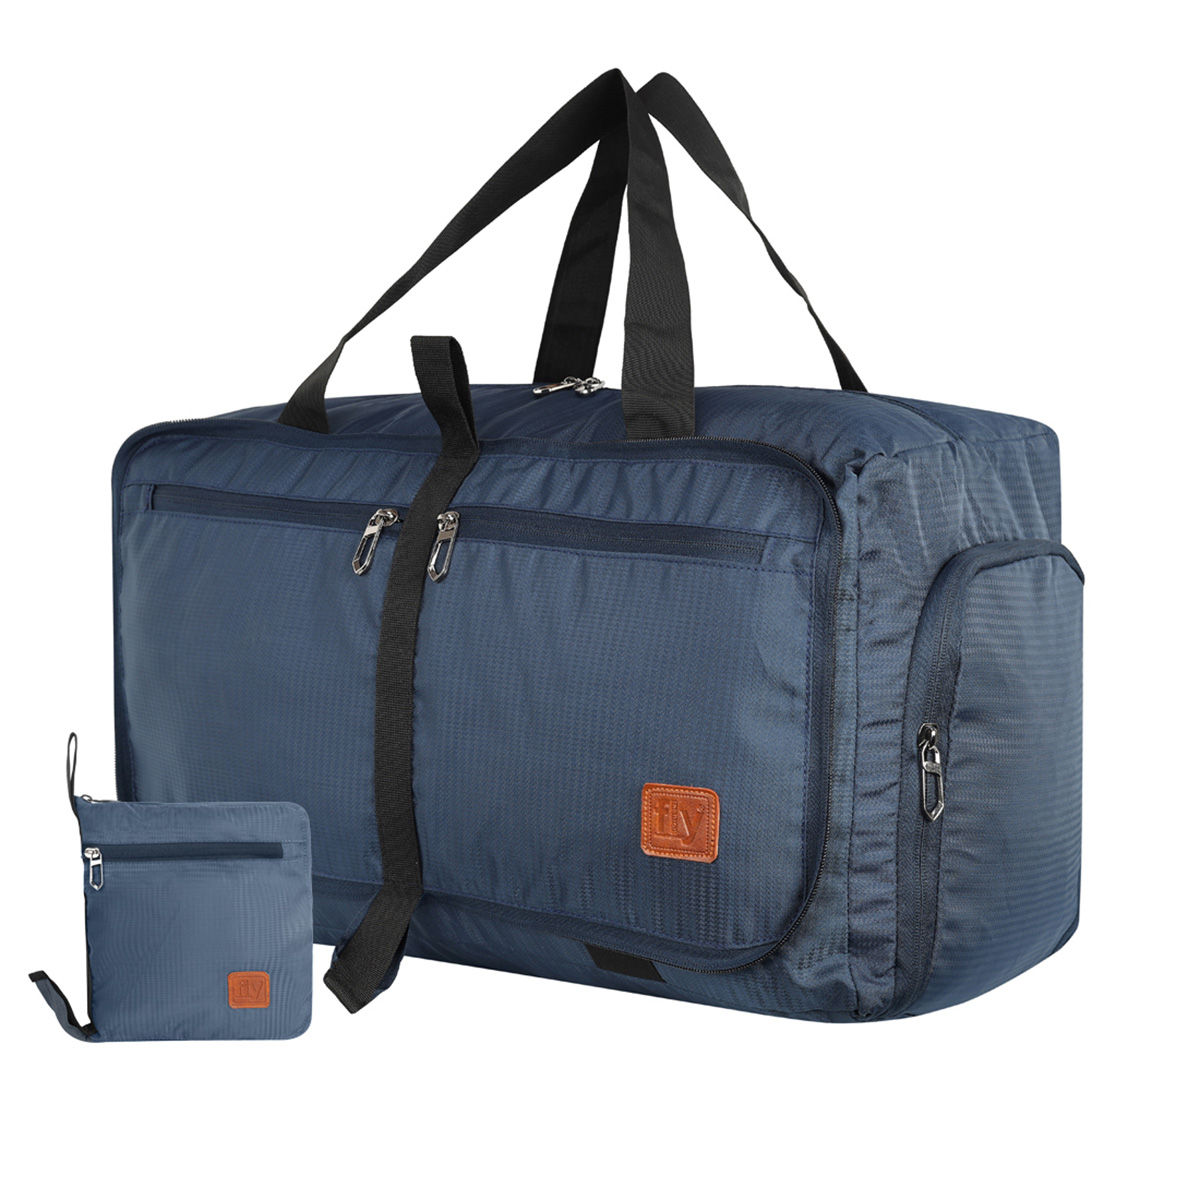 Buy Travel Duffel Bag Waterproof Duffle Bags for Men Oversized Genuine  Leather Carryon Weekend bag Canvas Overnight Bag Brown at Amazonin